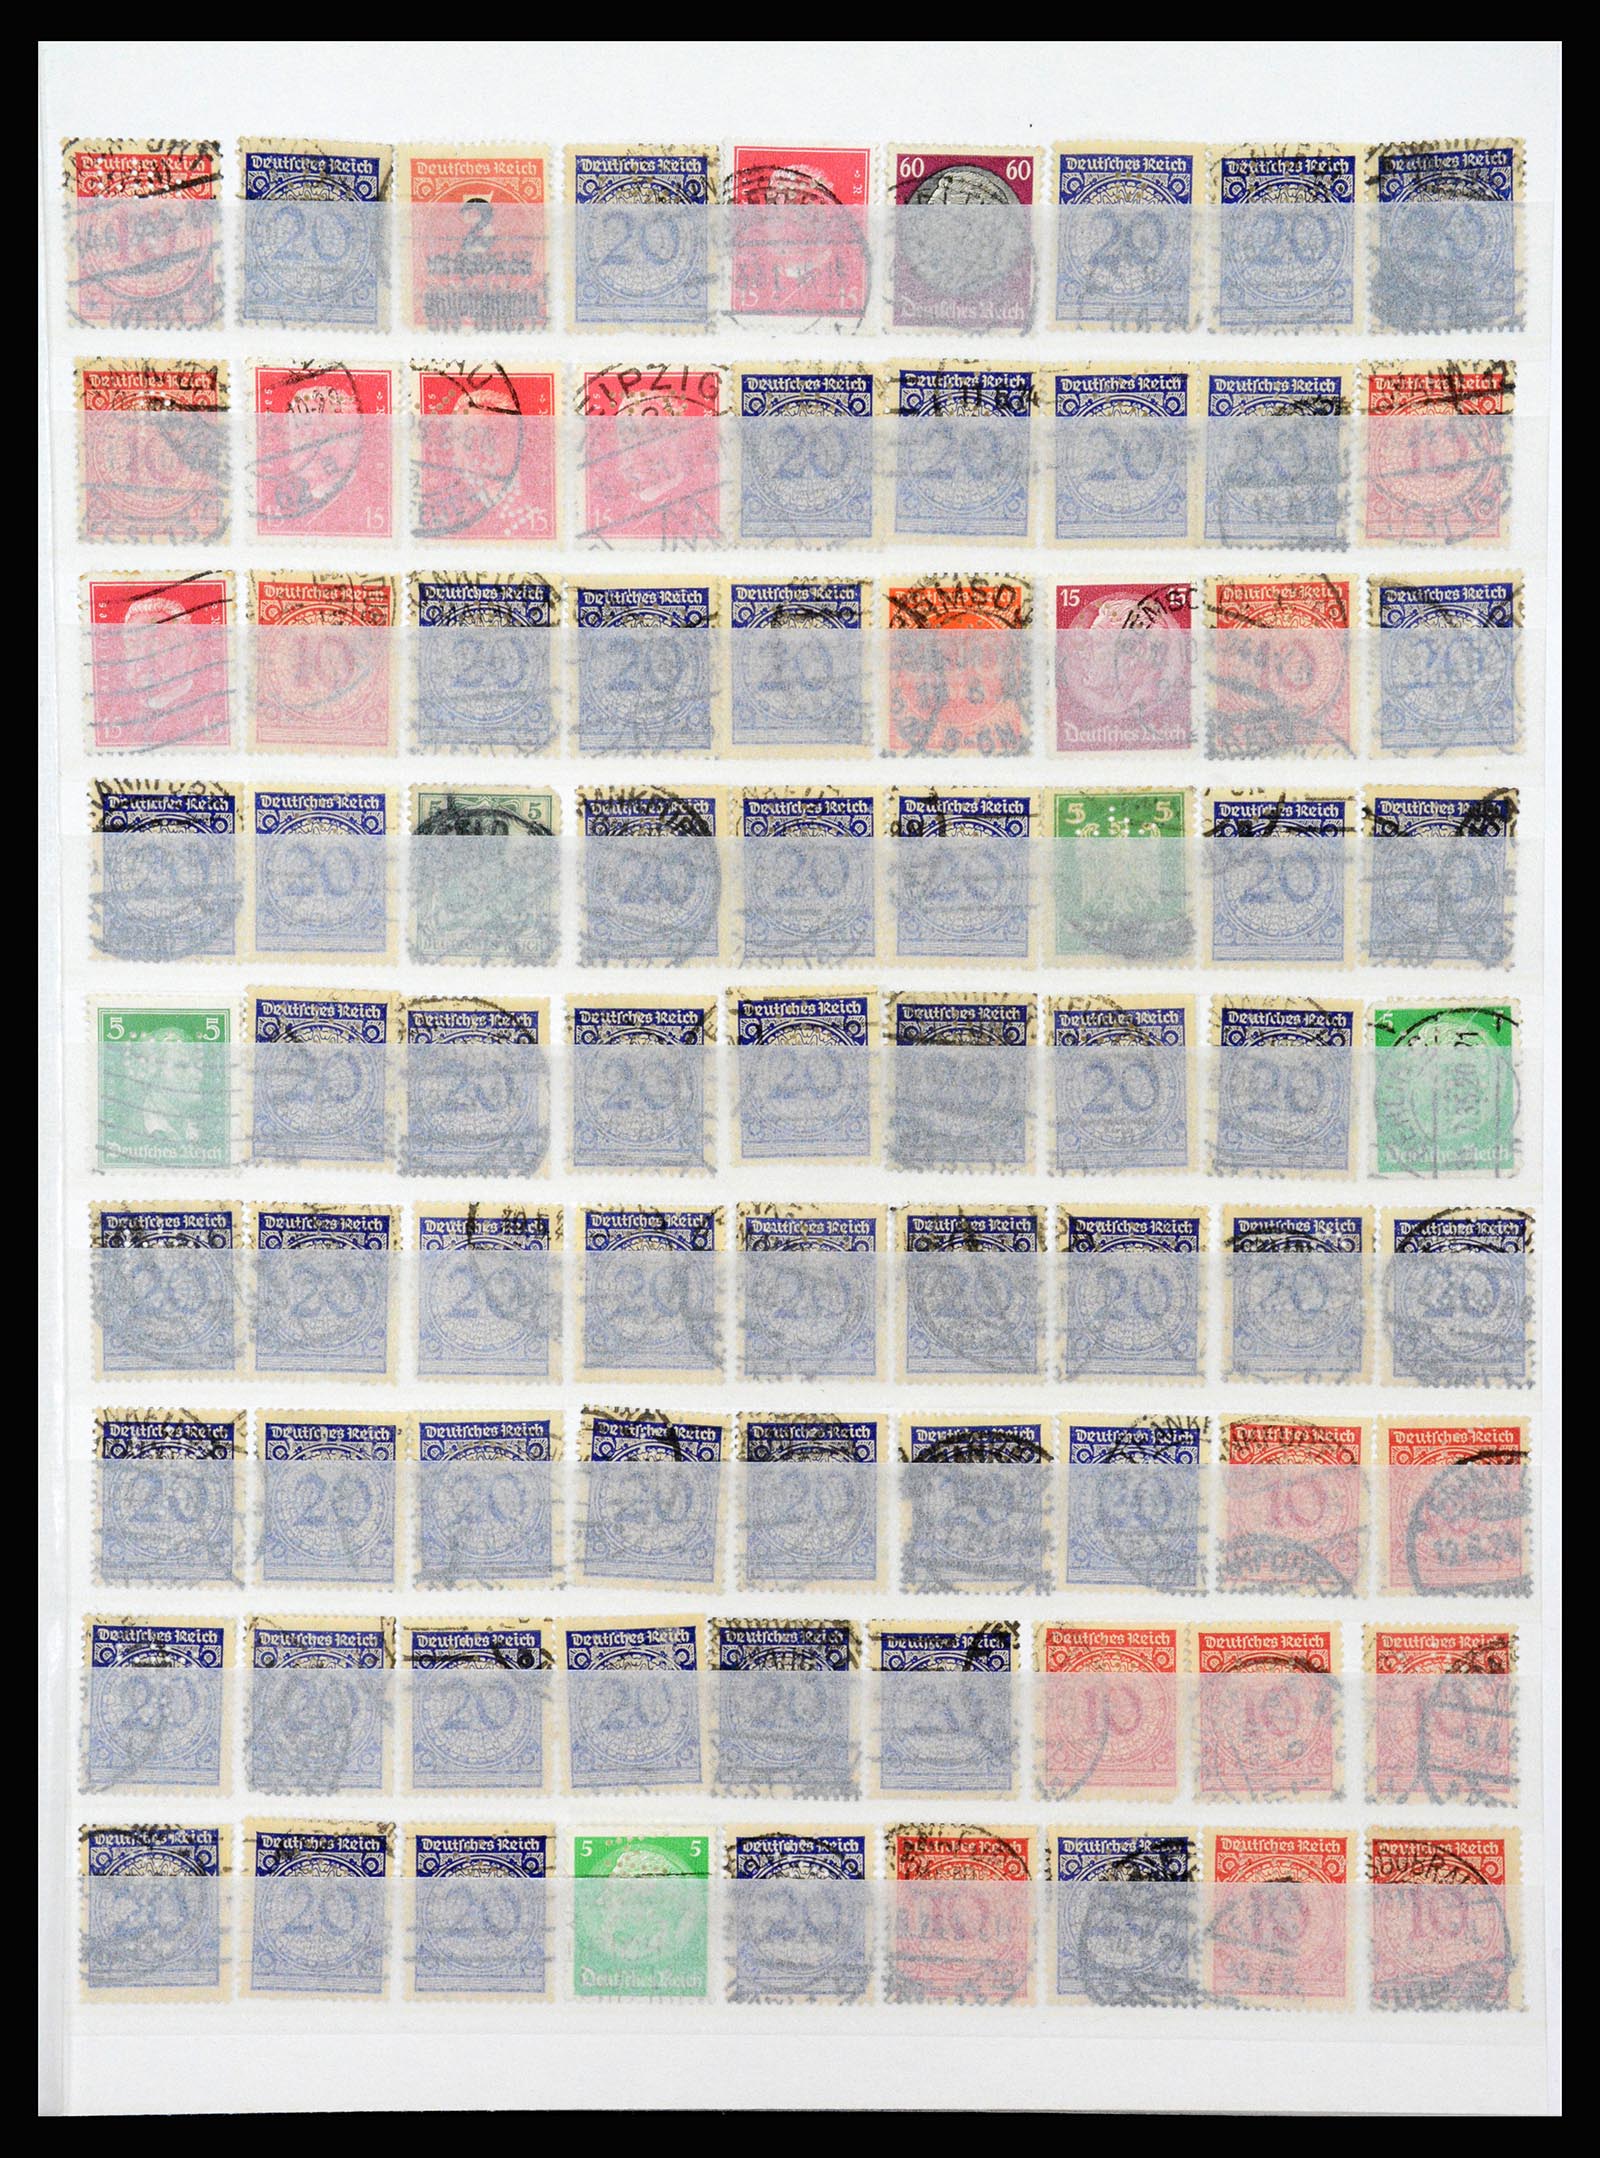 37254 007 - Postzegelverzameling 37254 Duitse Rijk perfins 1900-1945.